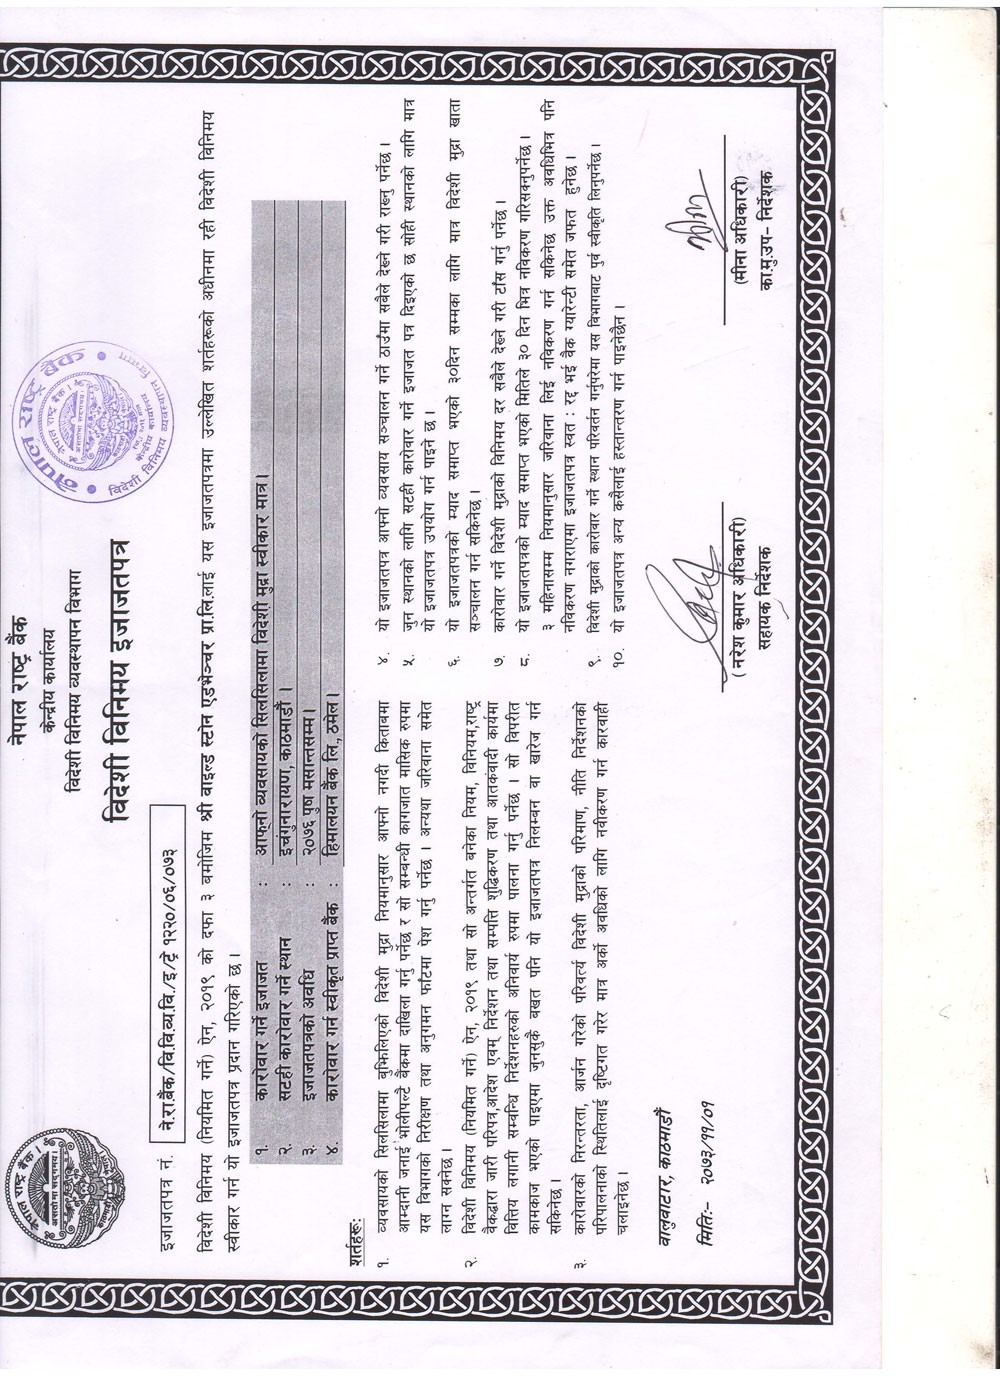 certificate of Nepal Rastriya Bank